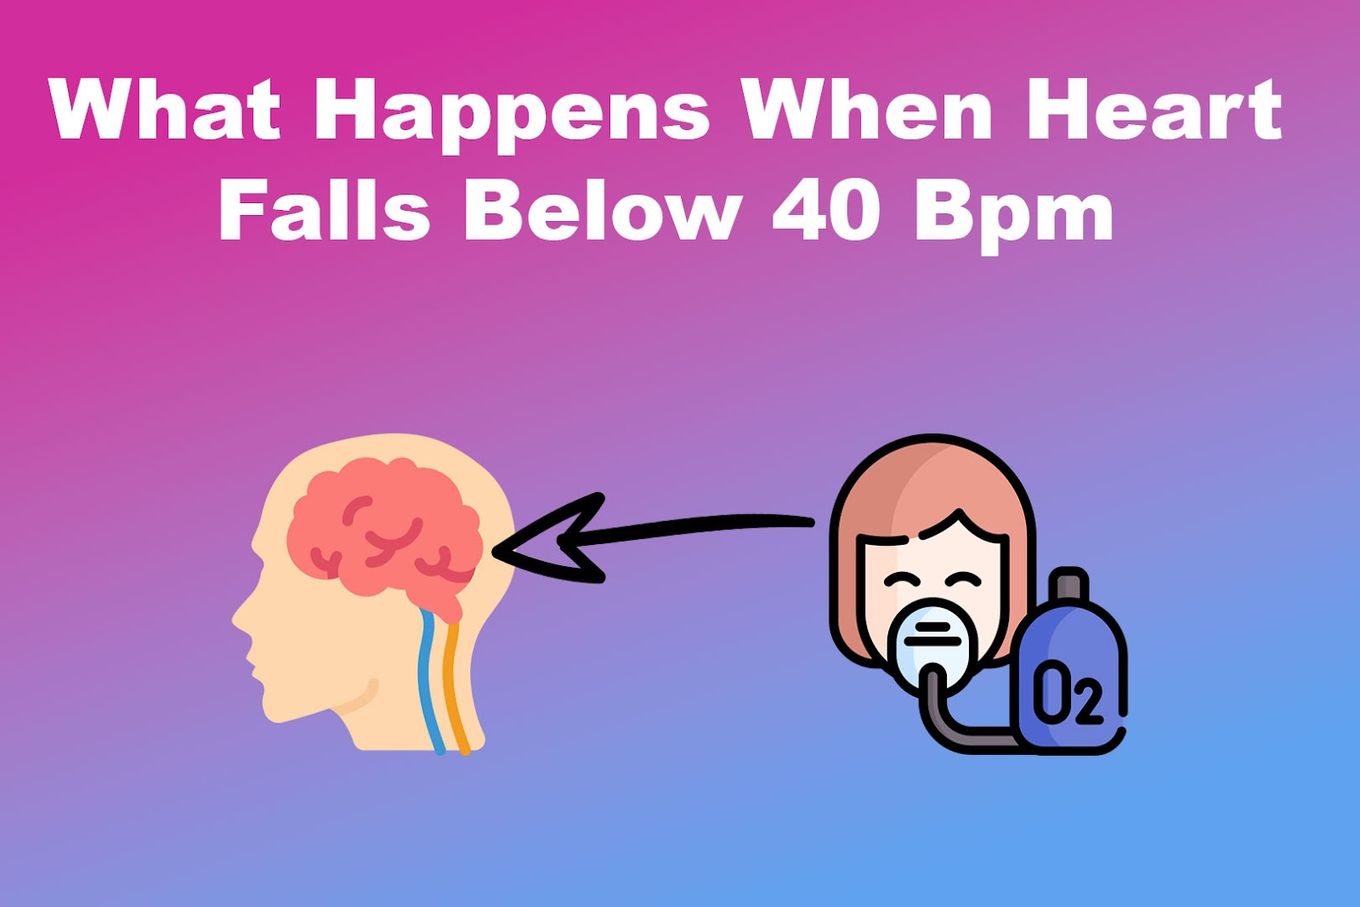 What Happens When Heart Falls Below 40 Bpm